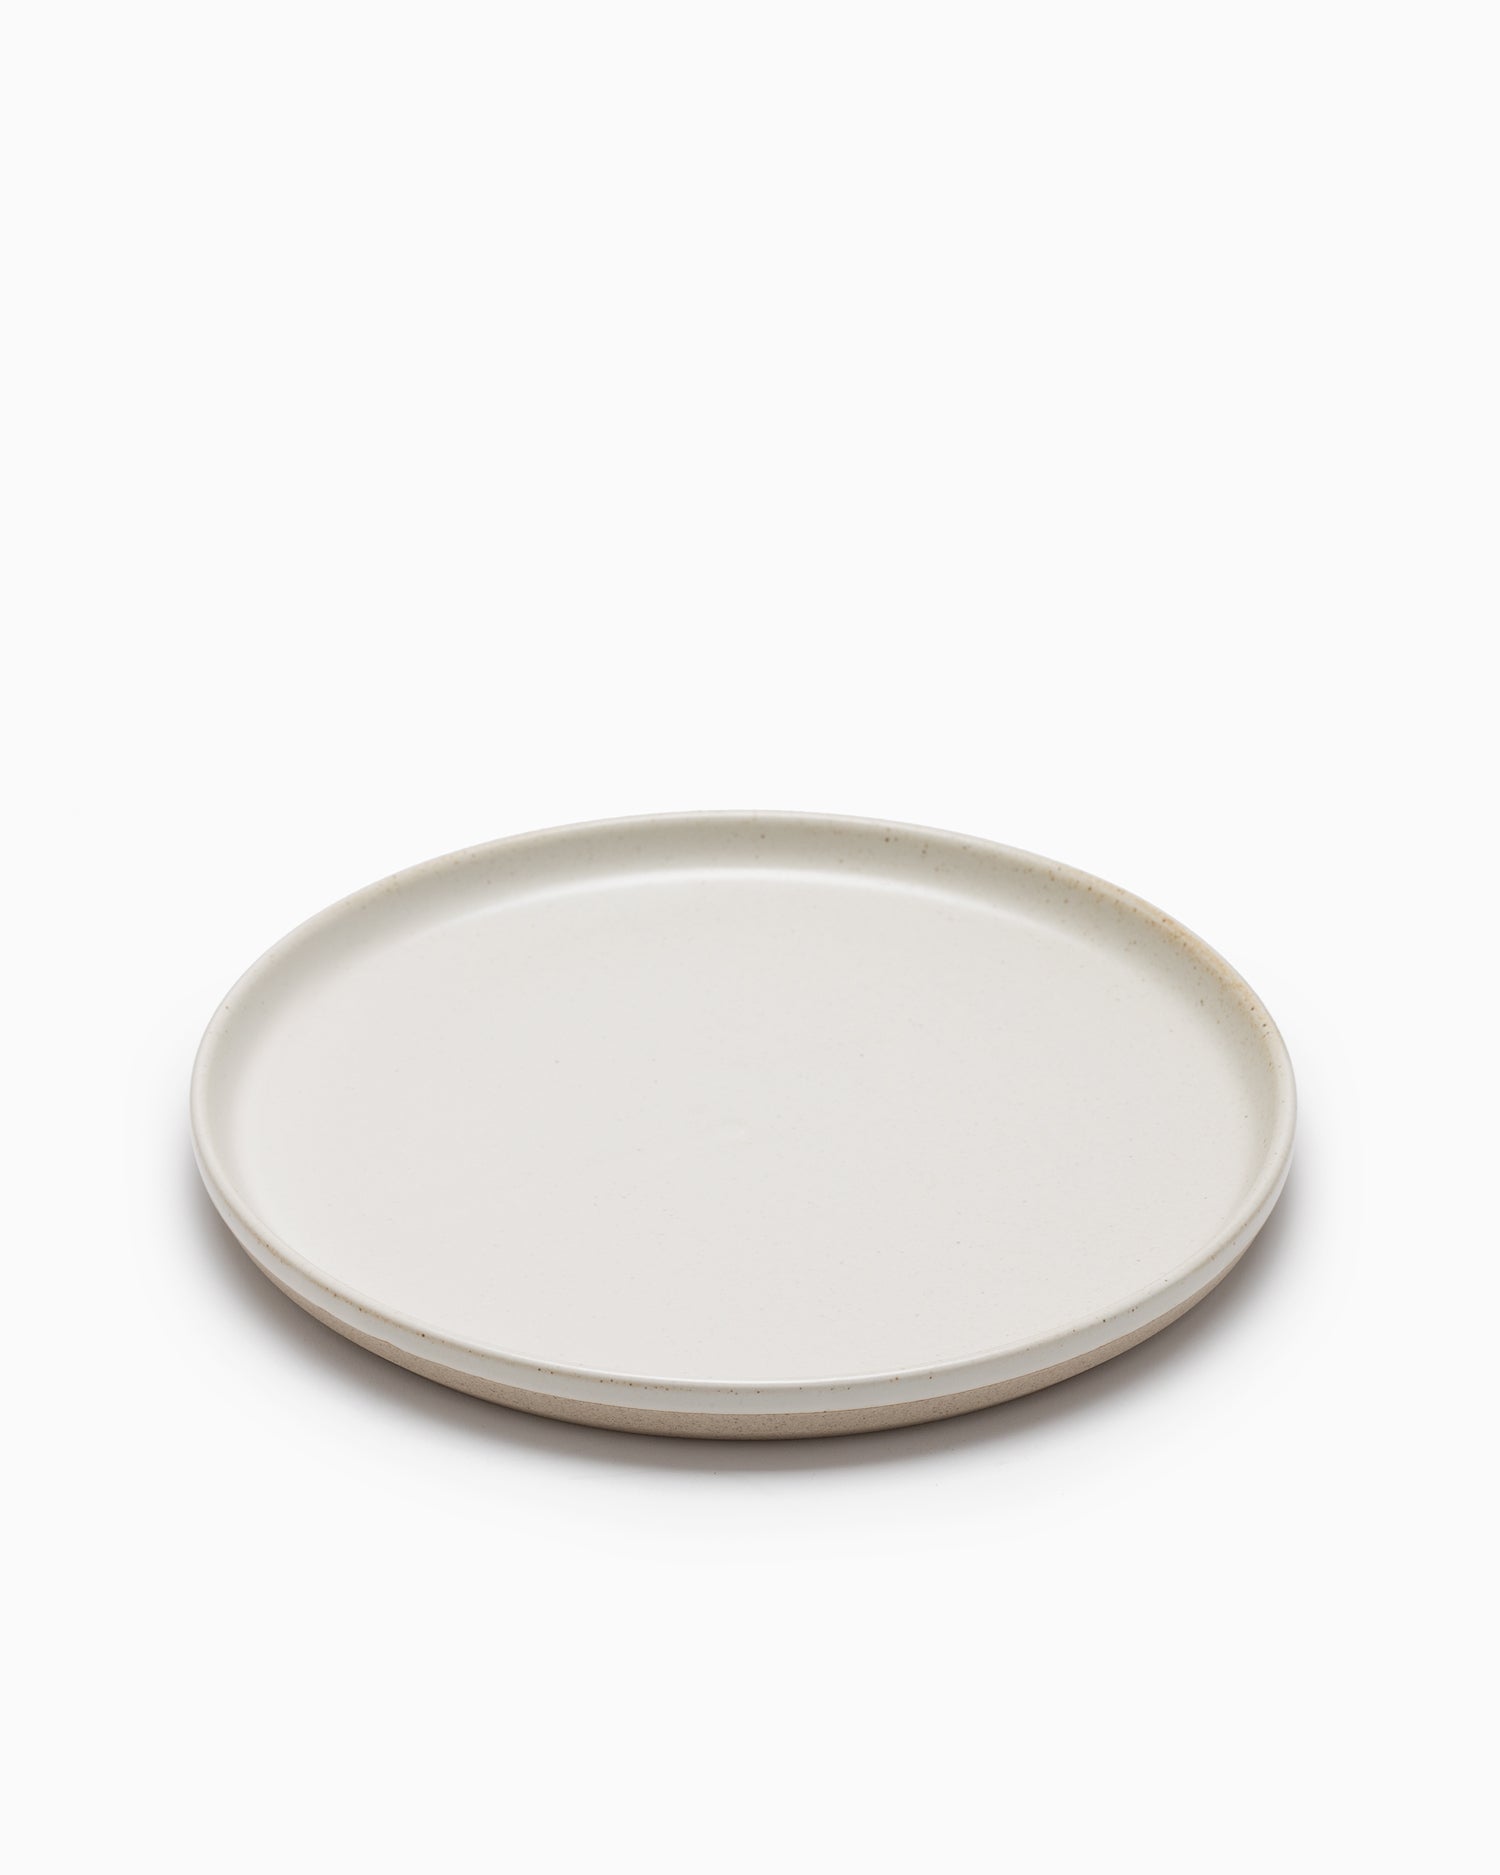 CLK-151 Medium Plate - White